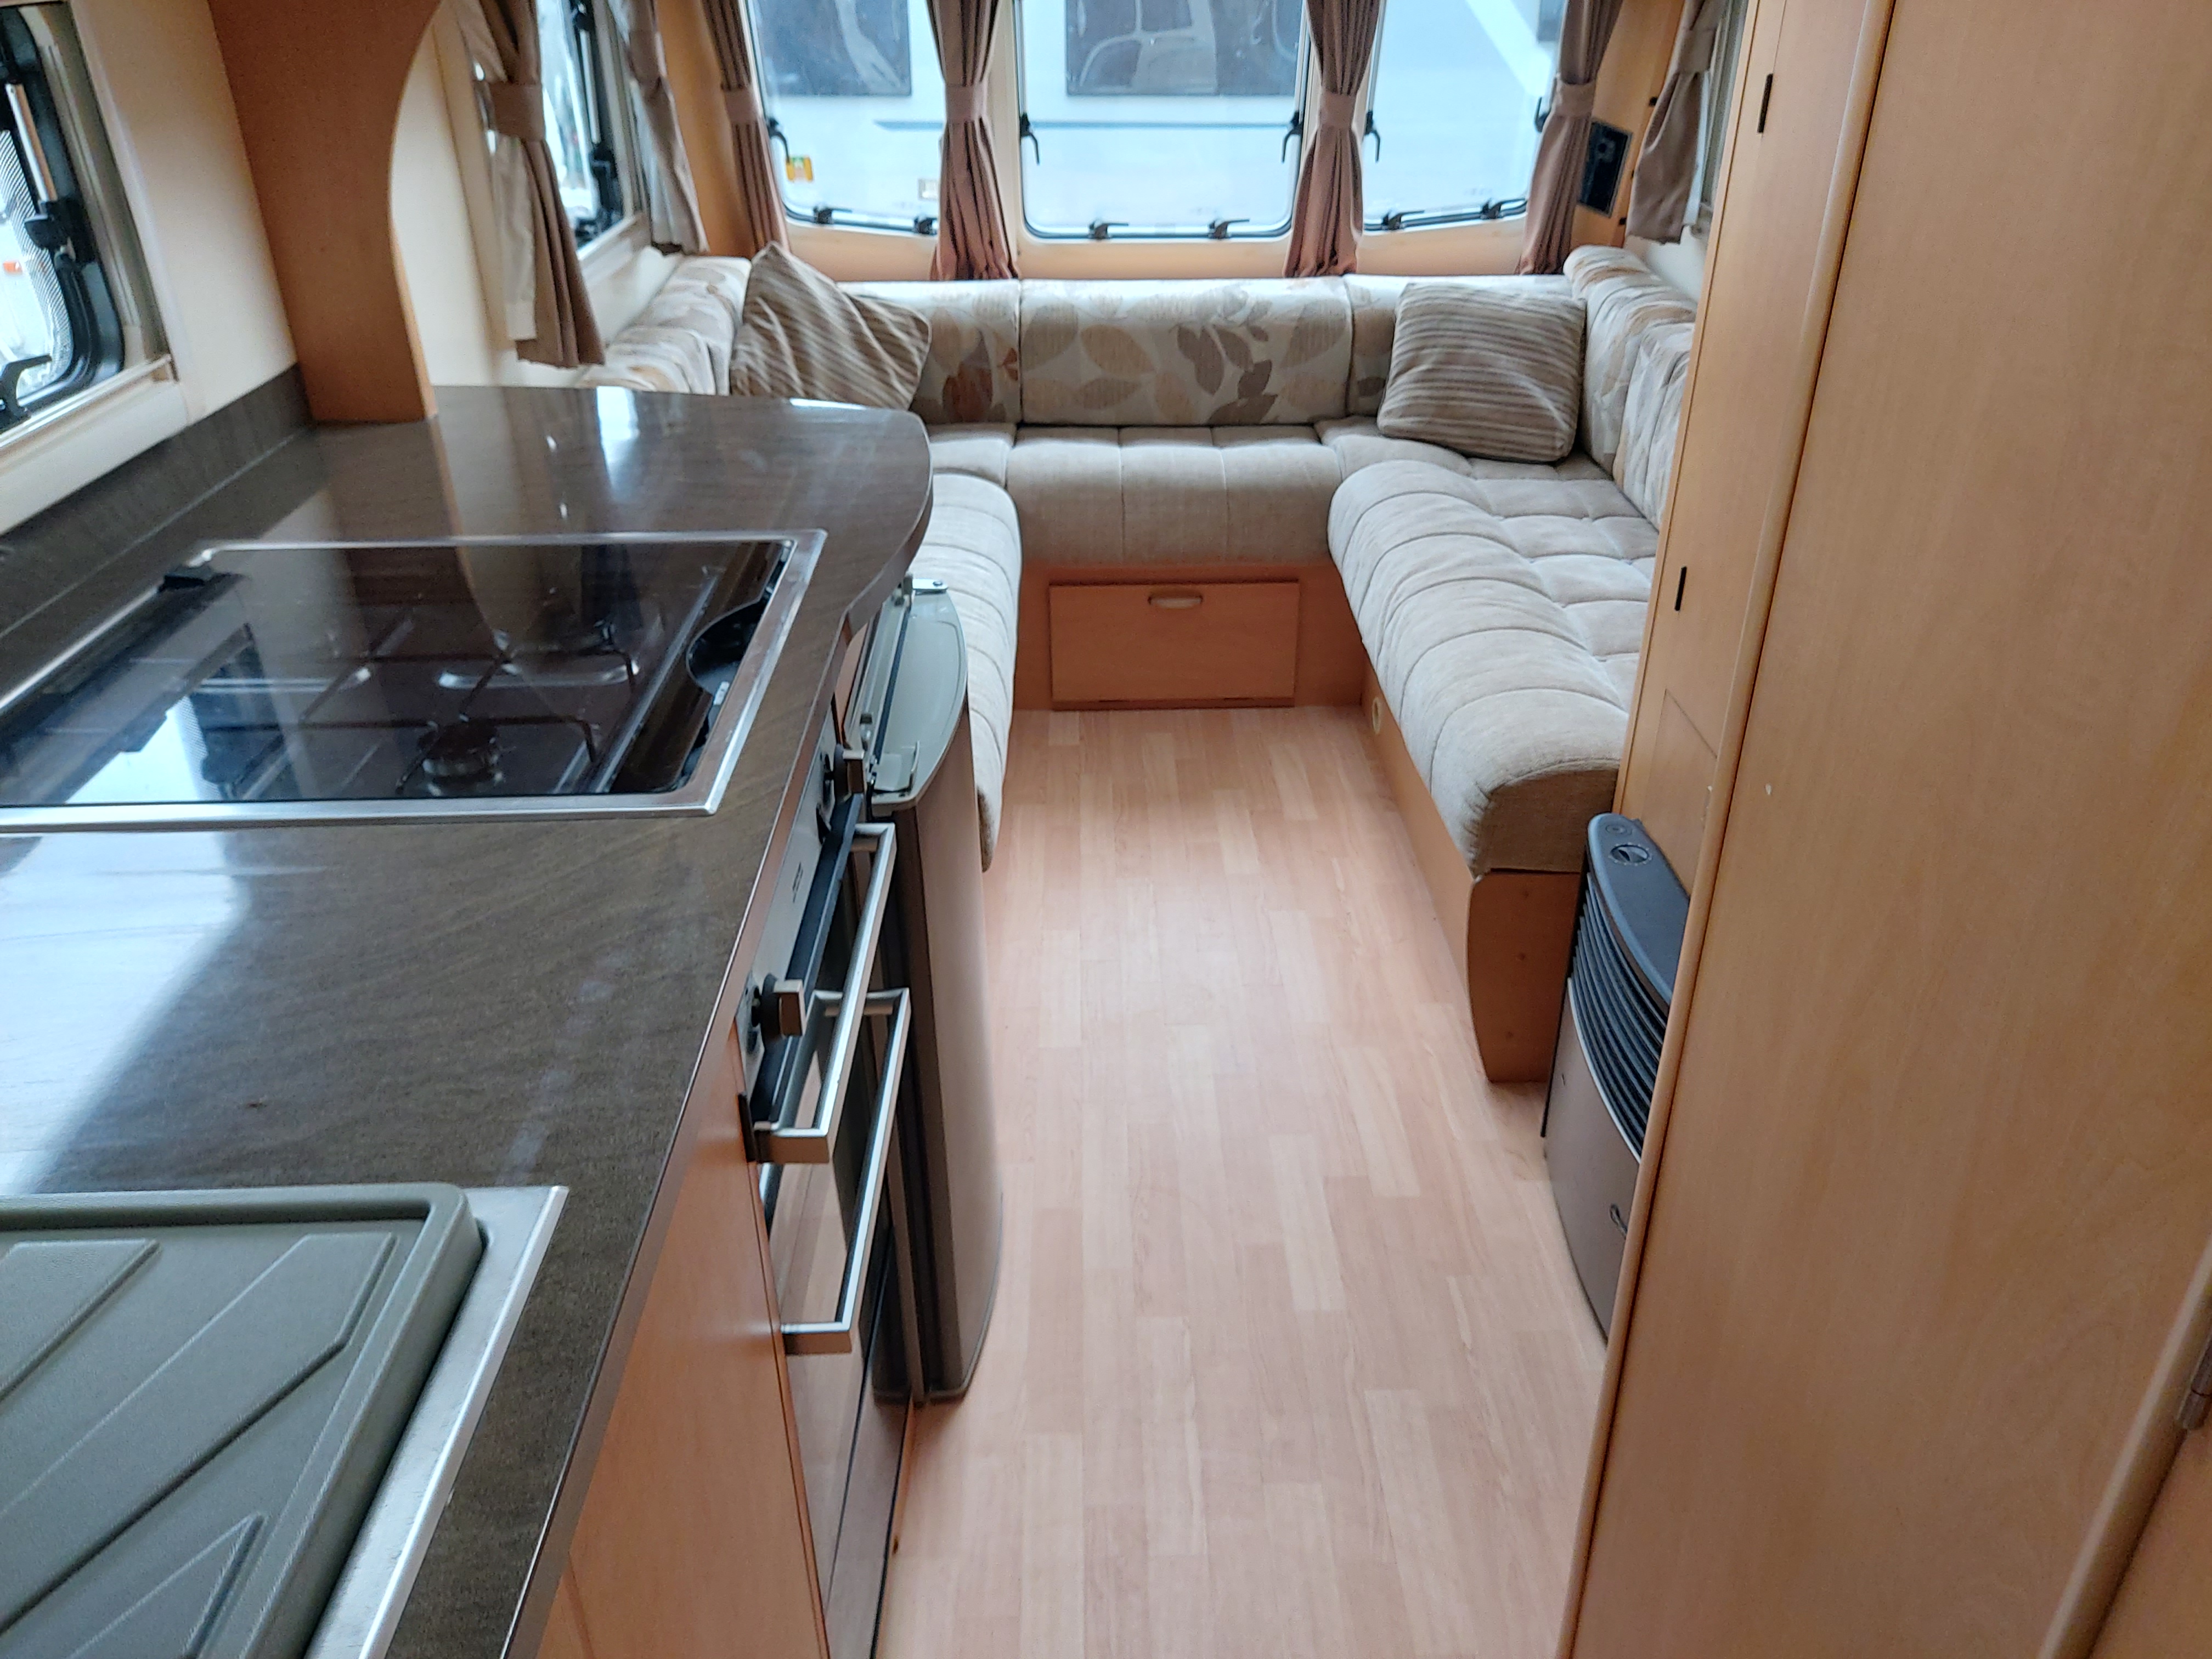 2010 Bailey Olympus 525 5 Berth Caravan, Motor Mover